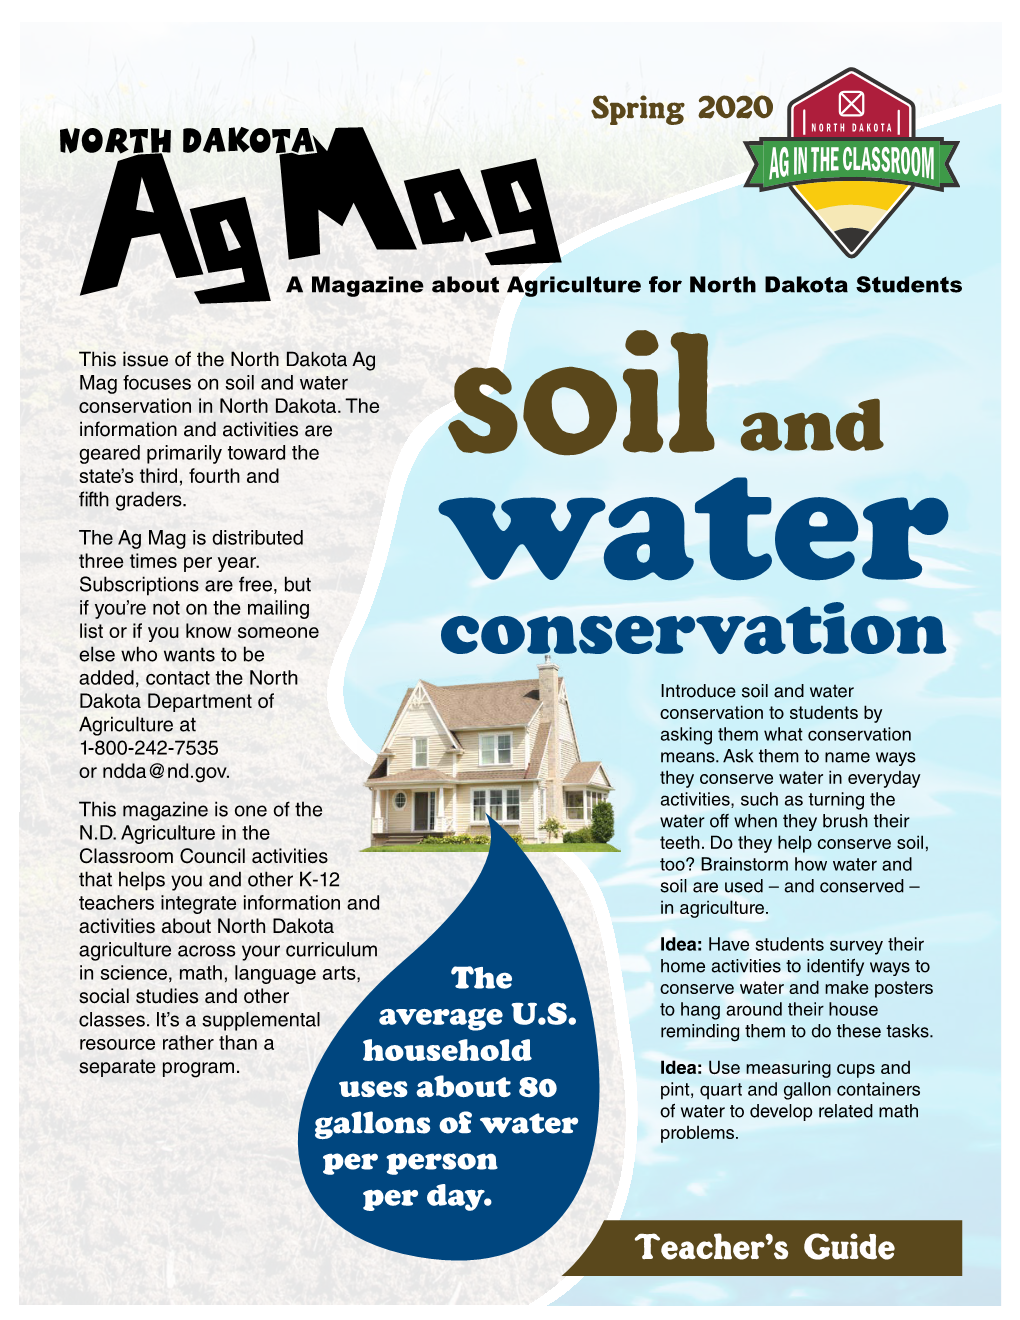 North Dakota Ag Mag Focuses on Soil and Water Conservation in North Dakota